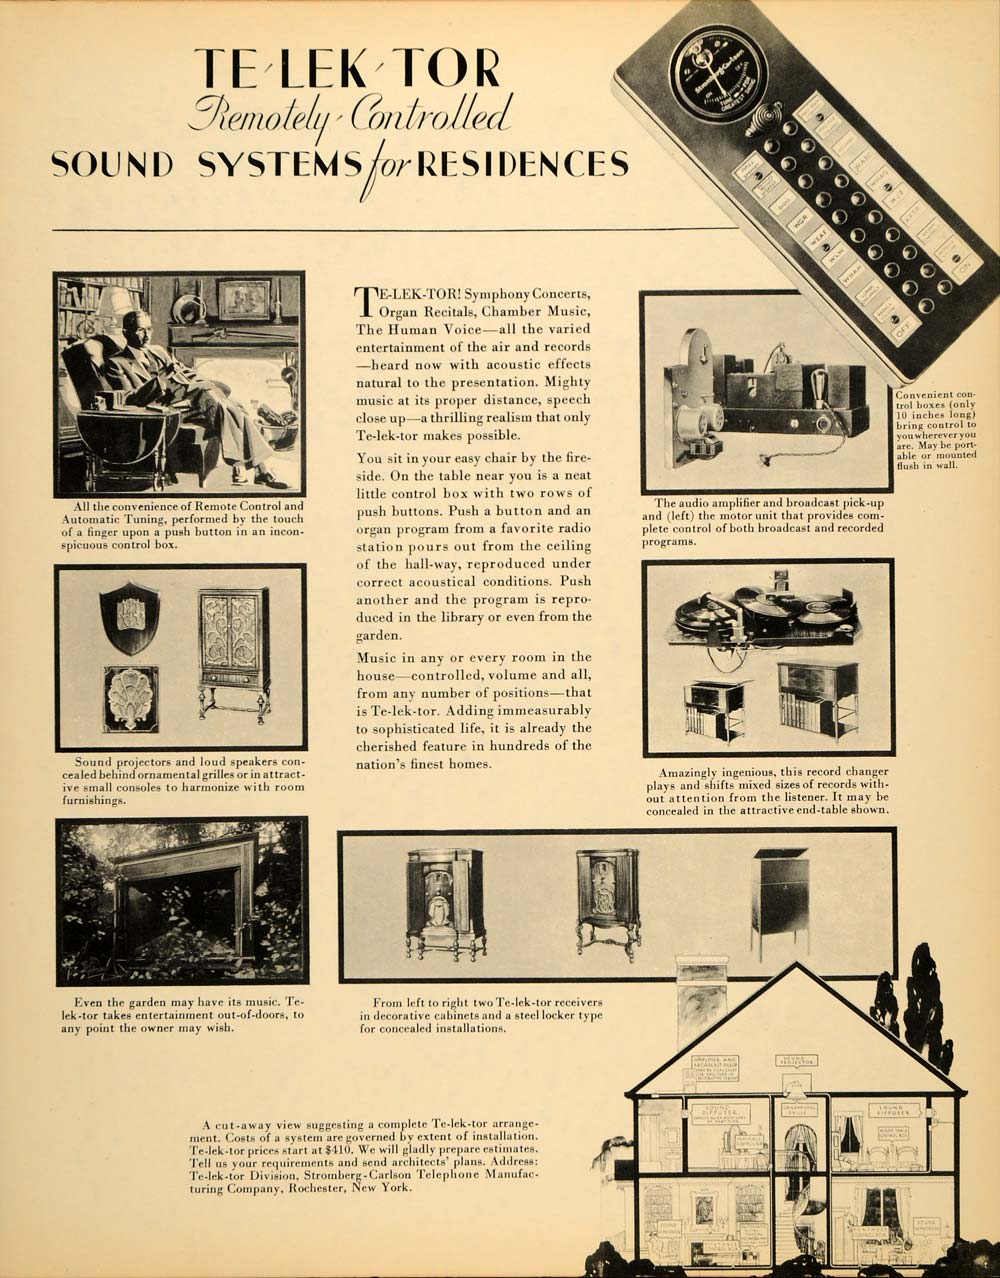 1934 Ad Telektor Remote Control Home Sound Systems - ORIGINAL ADVERTISING FTT9